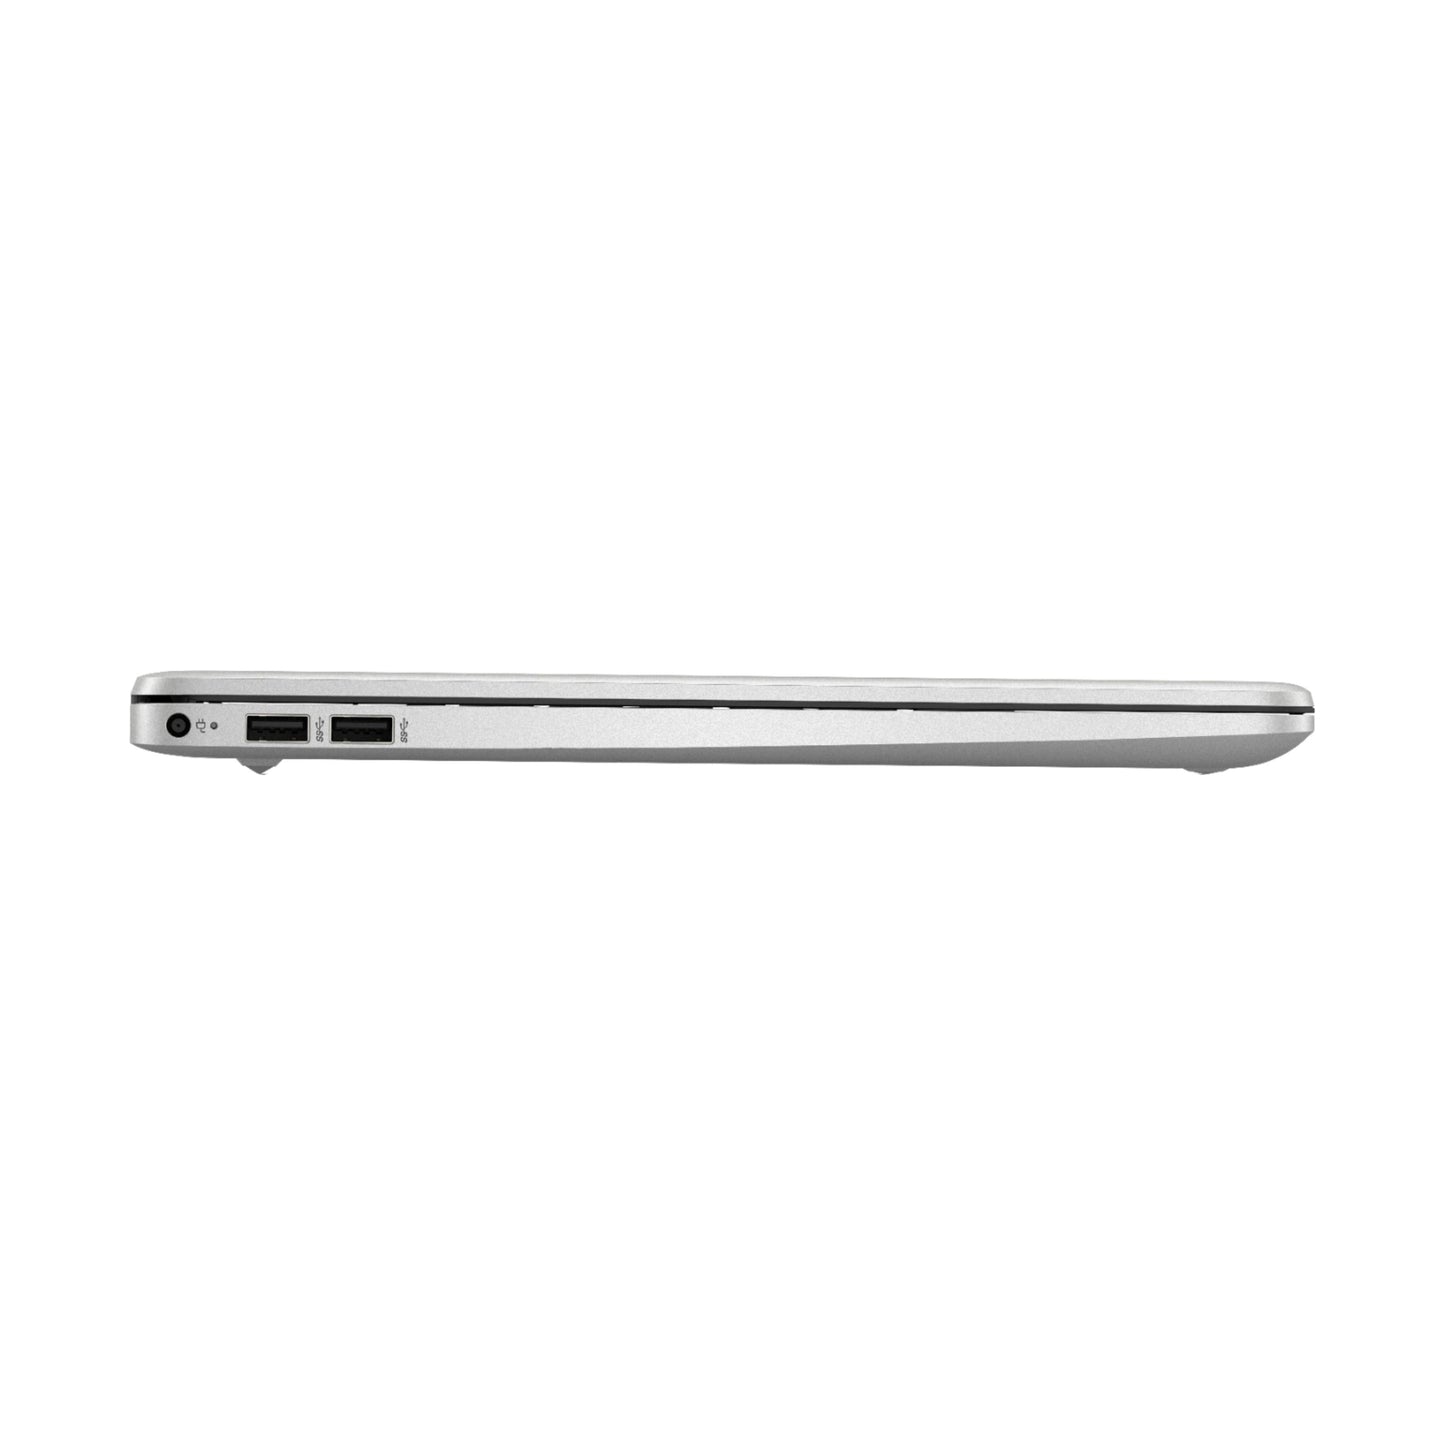 HP 15-DY2091WM i3-1115G4 15.6" Laptop (Brand New)